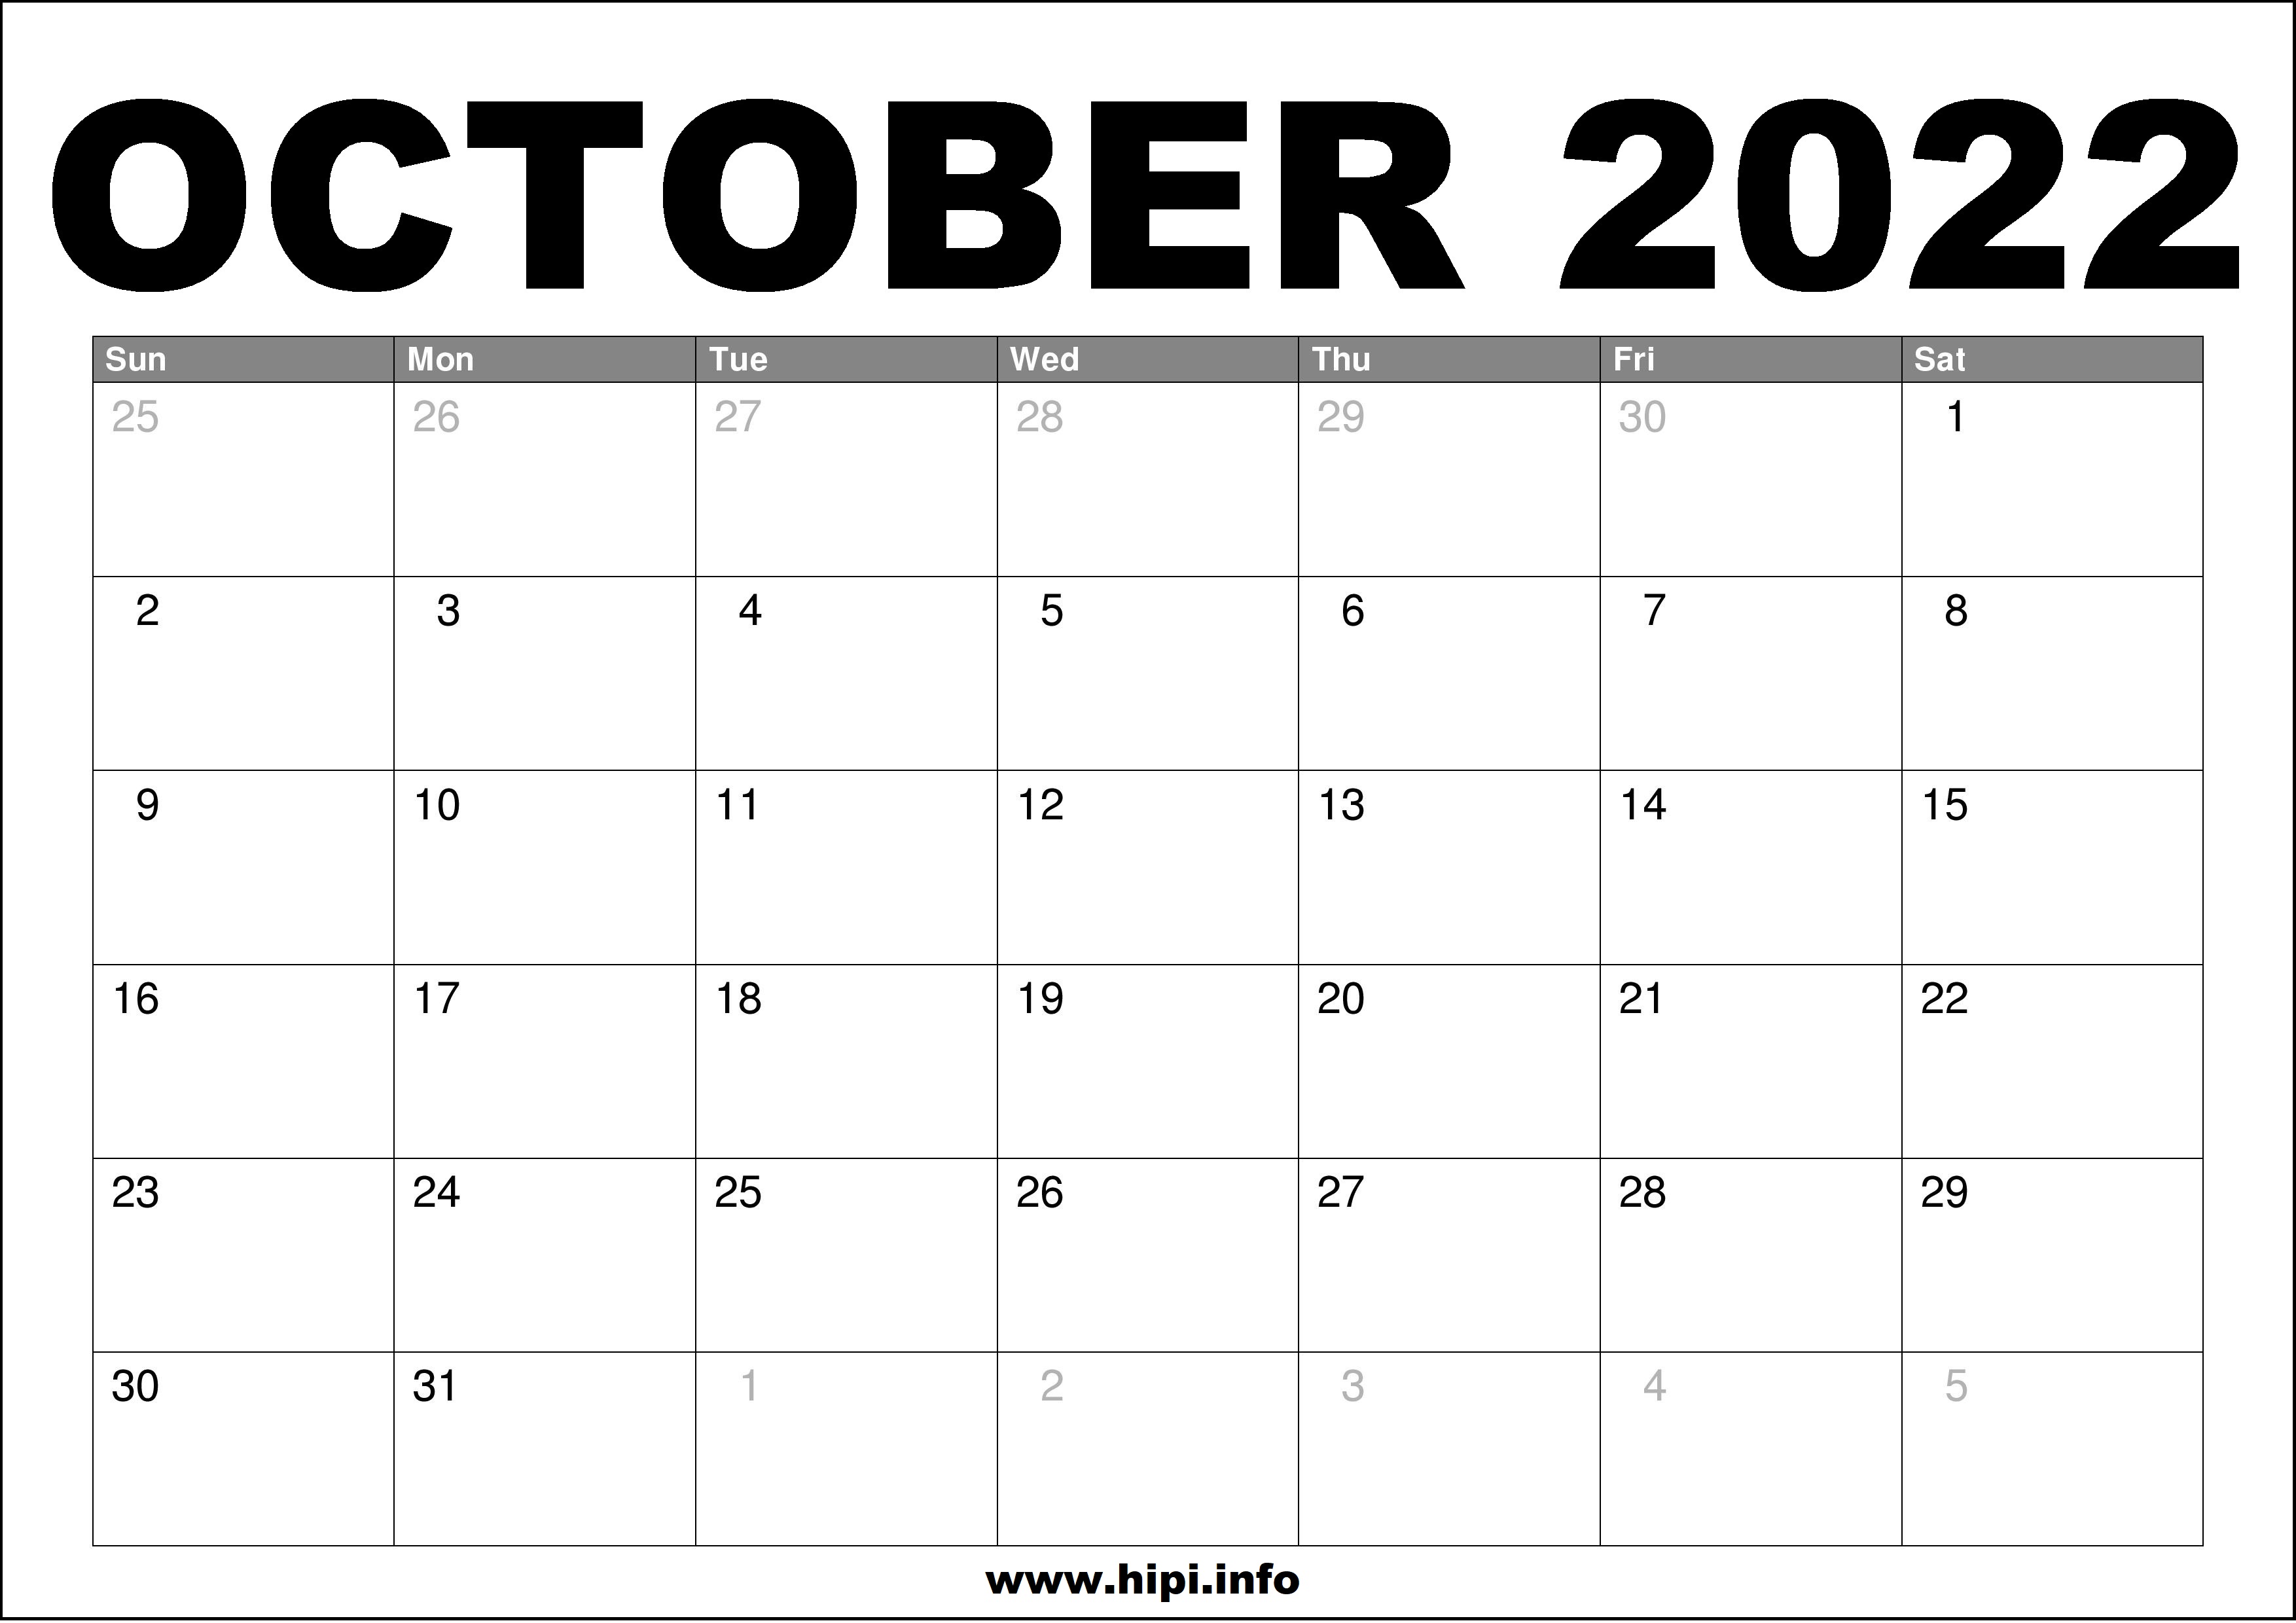 Free Printable October Calendar 2022 October 2022 Calendar Printable Free - Hipi.info | Calendars Printable Free